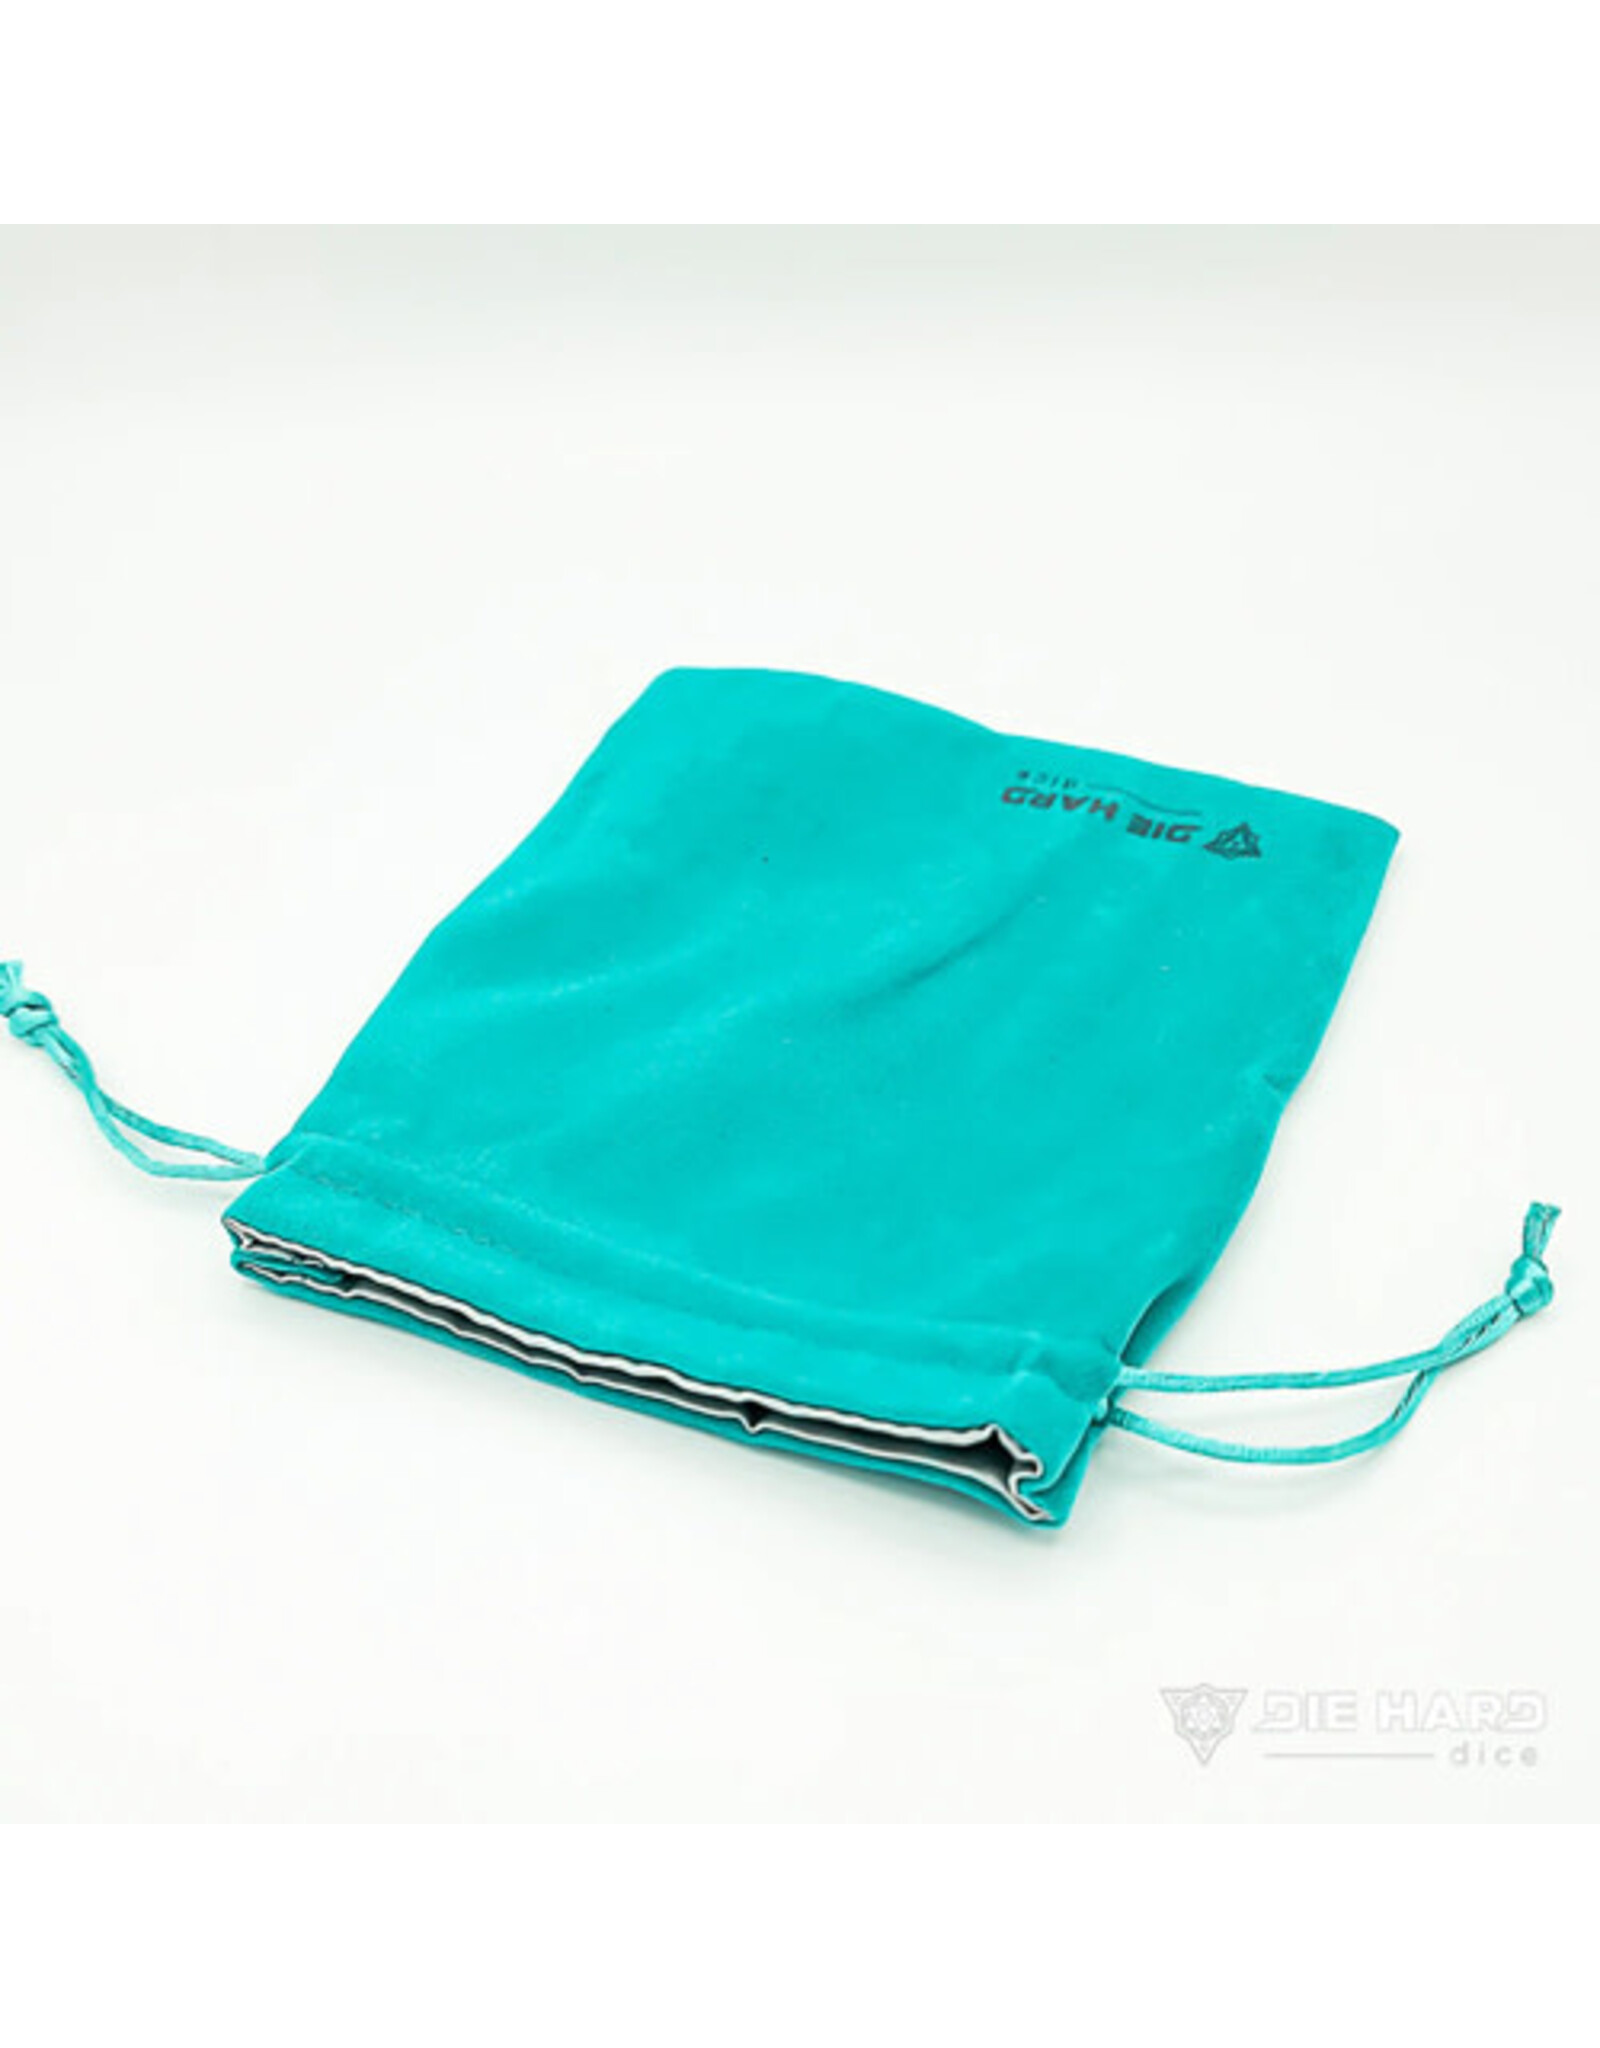 Velvet Dice Bag - Medium Teal